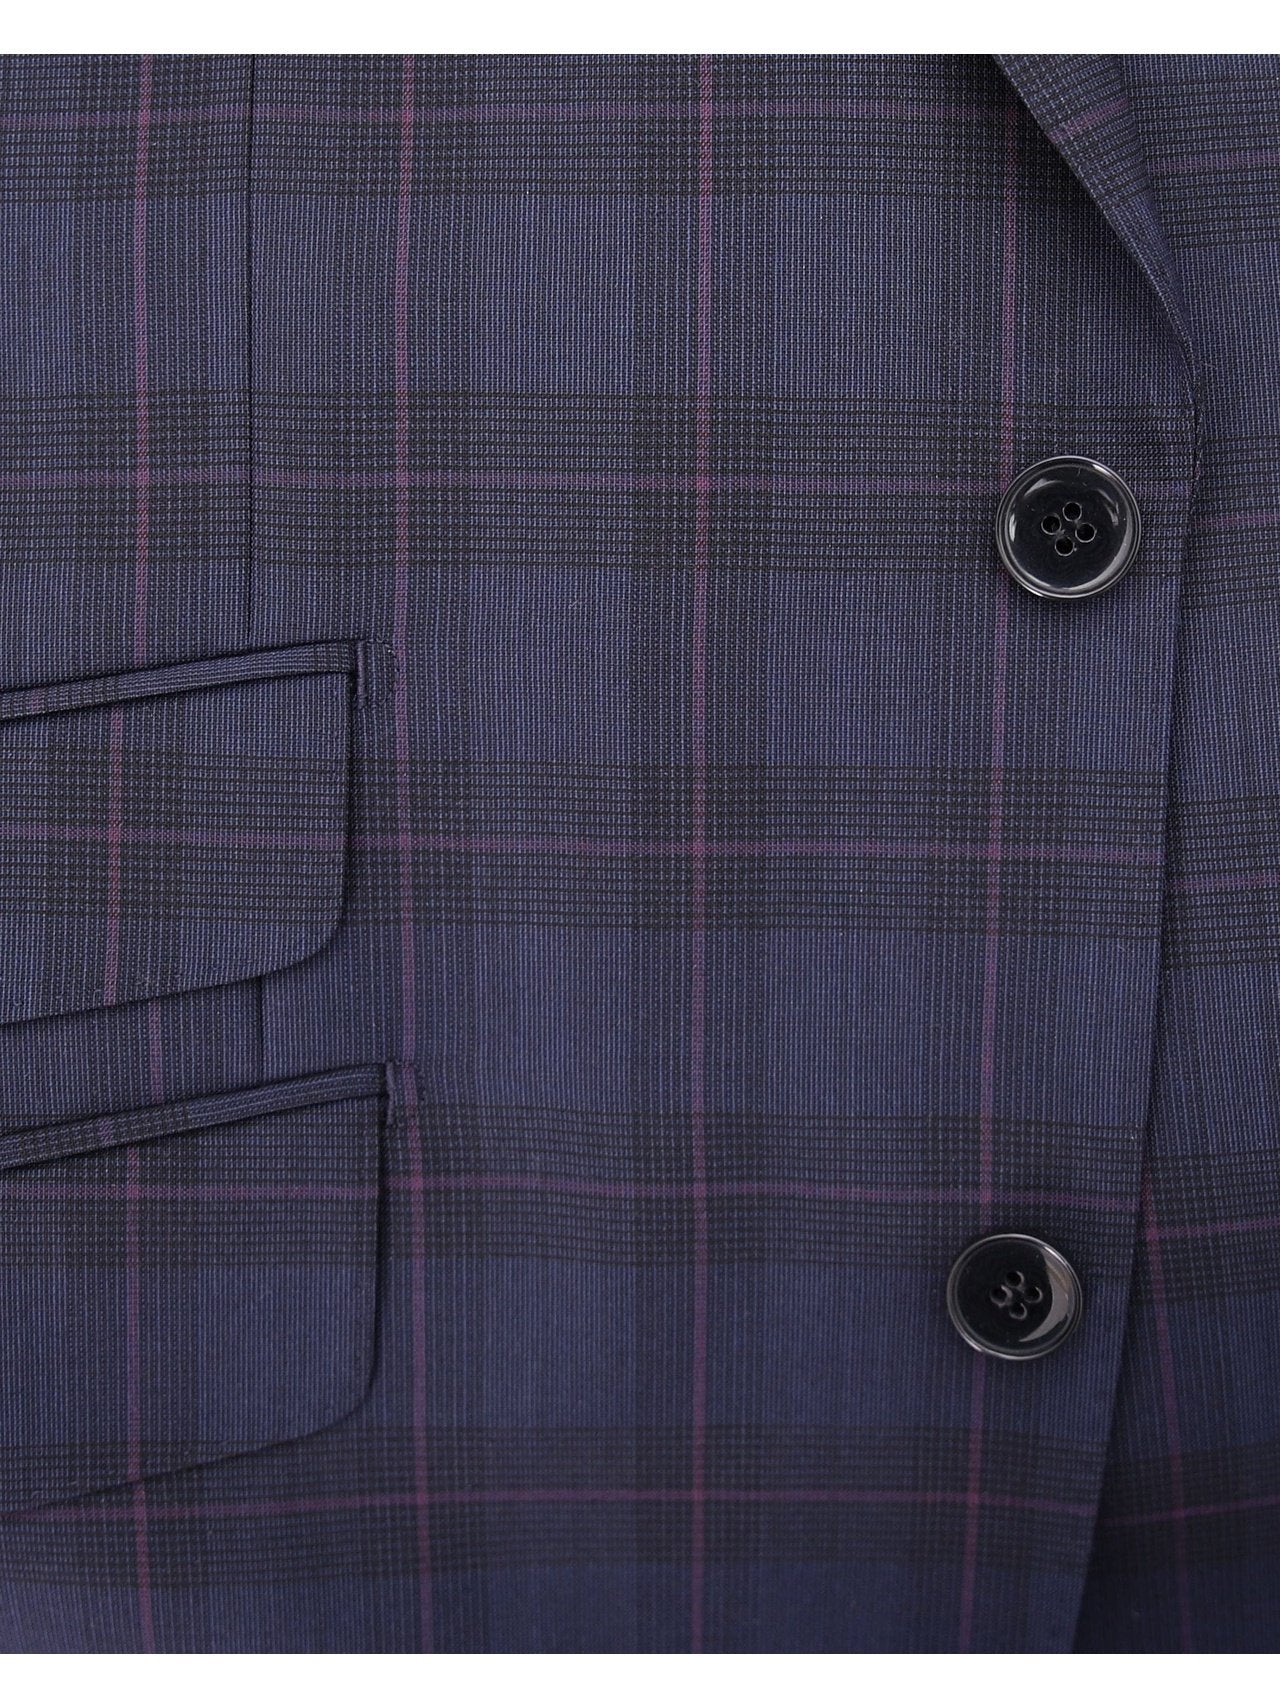 Napoli SUITS Napoli Mens Navy & Purple Plaid 100% Wool Slim Fit Suit With Peak Lapels